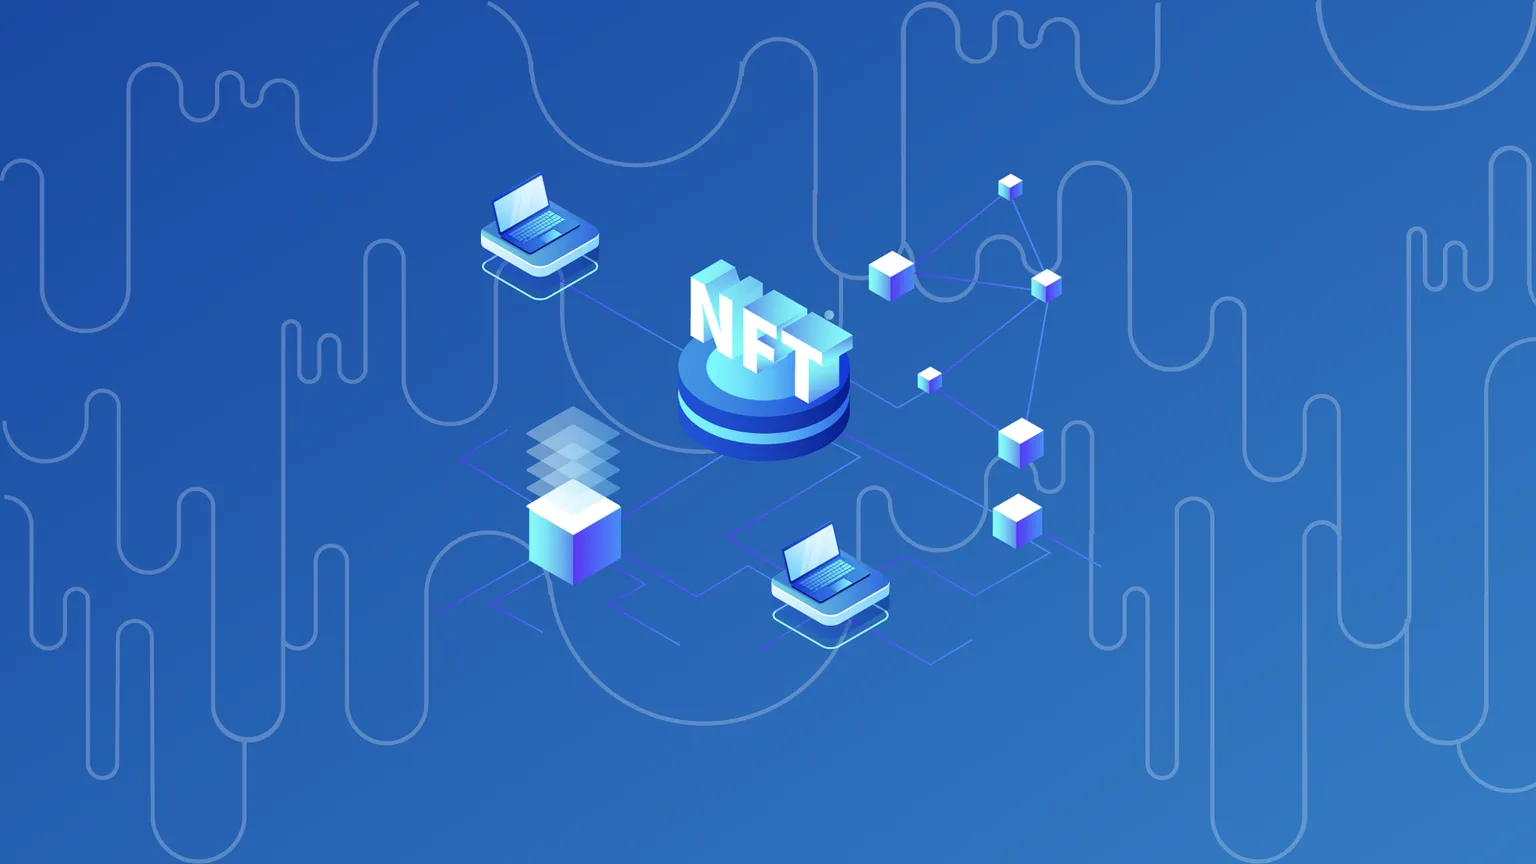 web3 and nft networked devices c. Rodrigo Martinez/Decrypt 2022